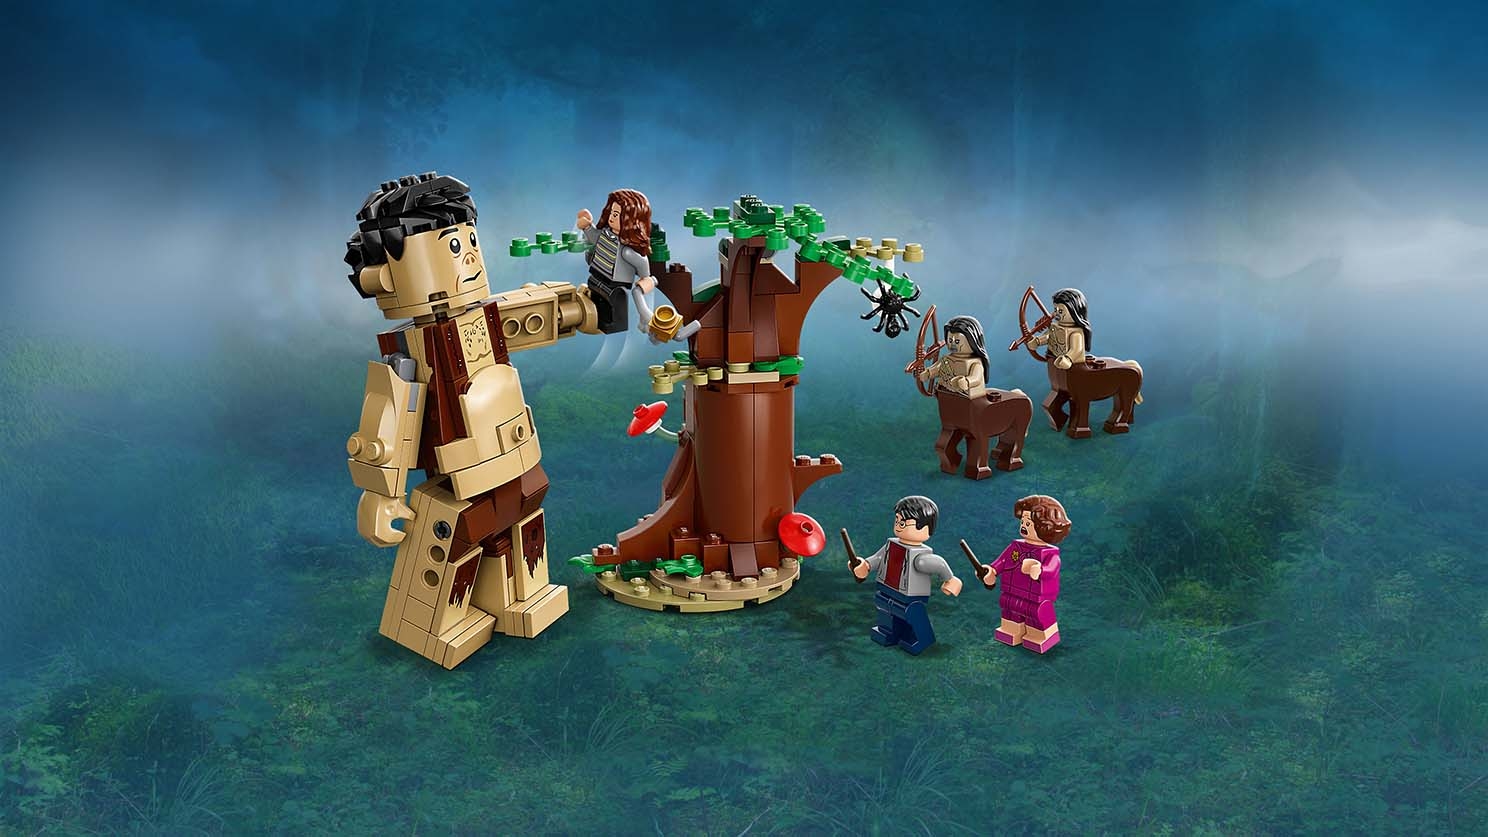 Comprar Lego Harry Potter - A Floresta Proibida: O Encontro de